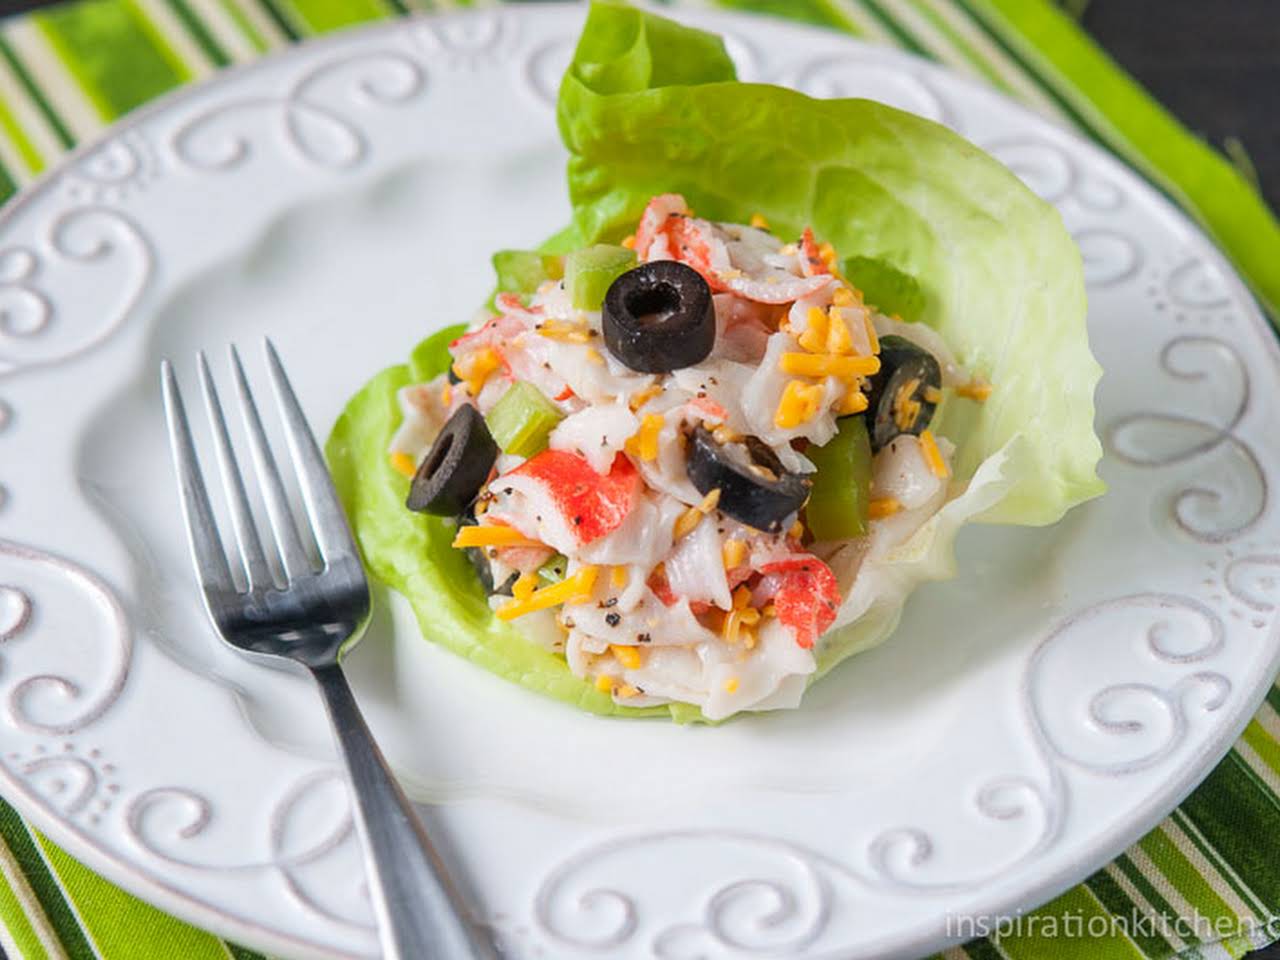 10 Best Imitation Crab Salad Healthy Recipes Yummly